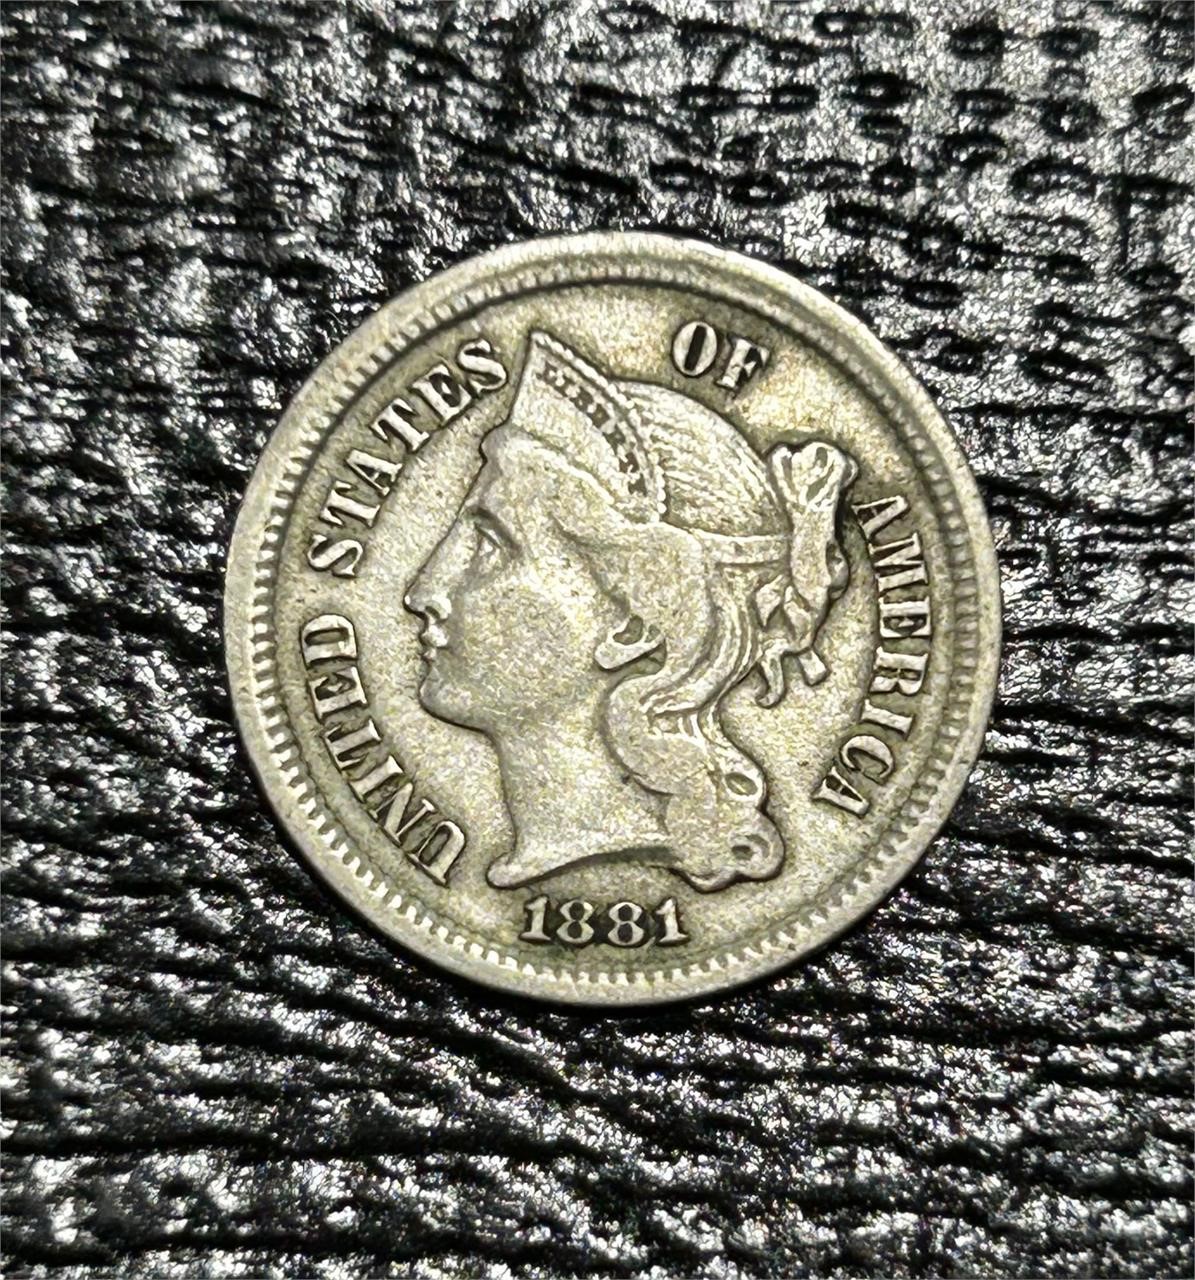 U.S 1881 Nickel Three Cent